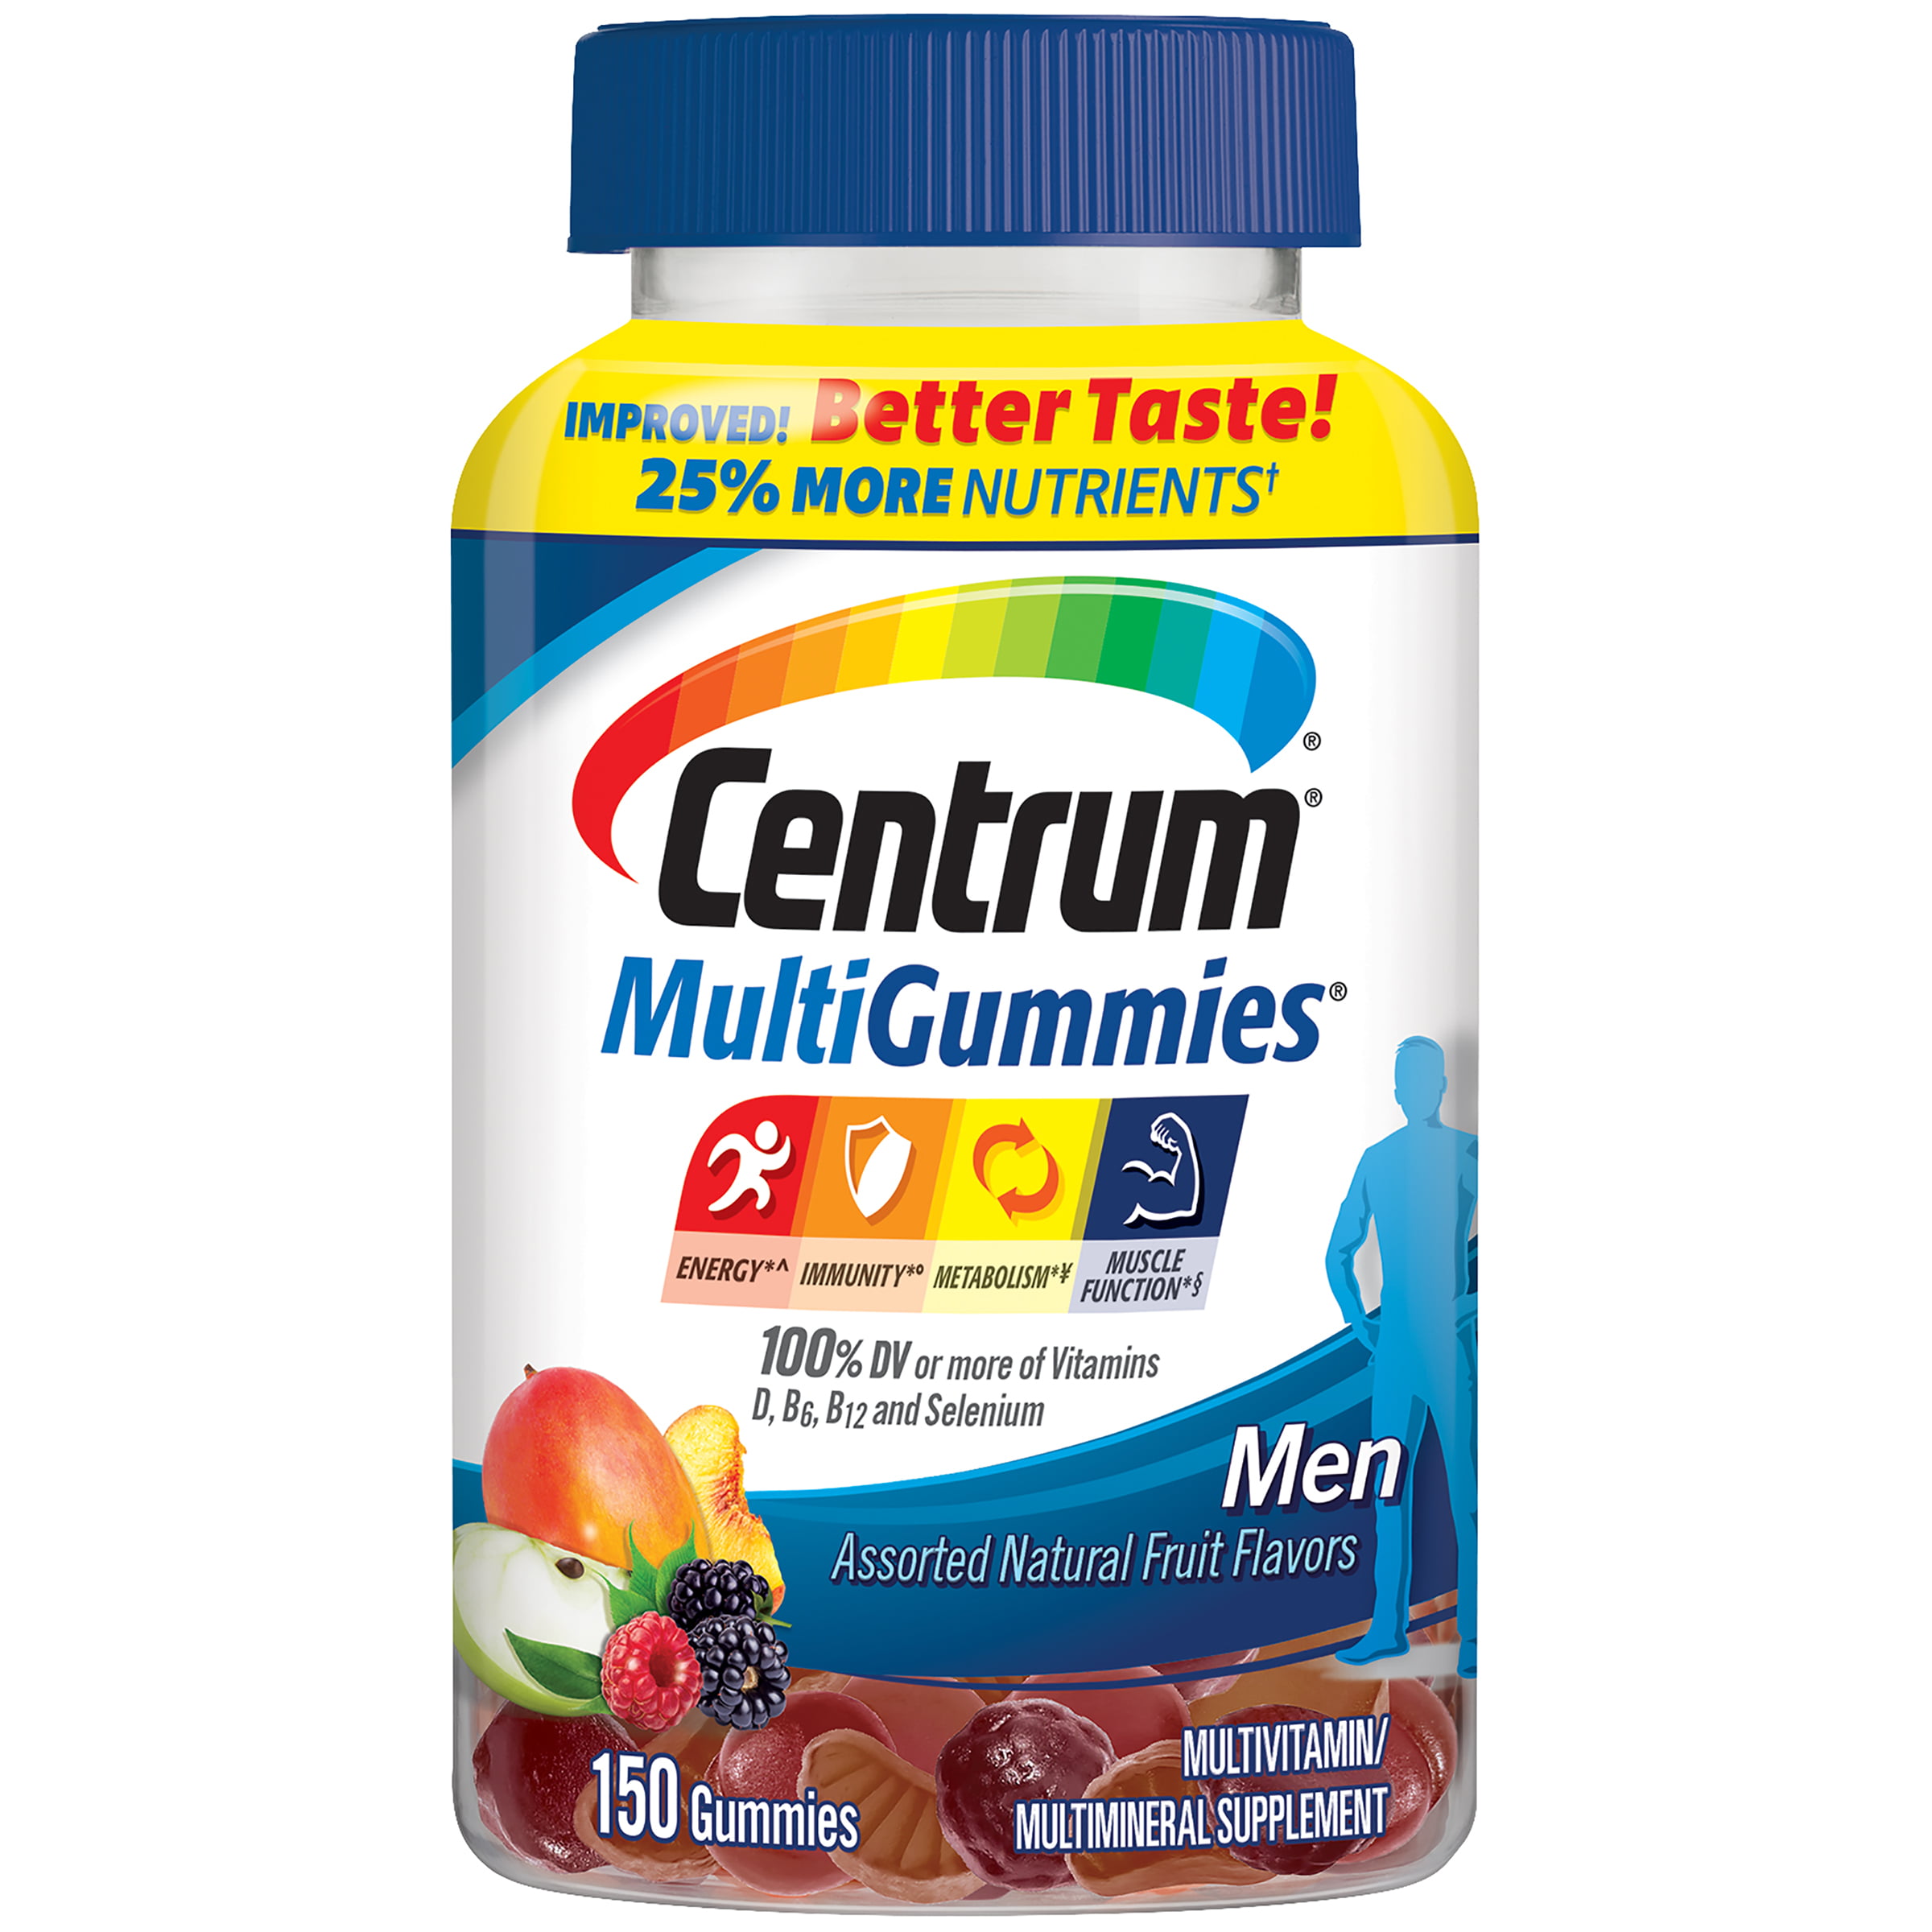 Men's Gummy Vitamins Gummies biotin vitamins